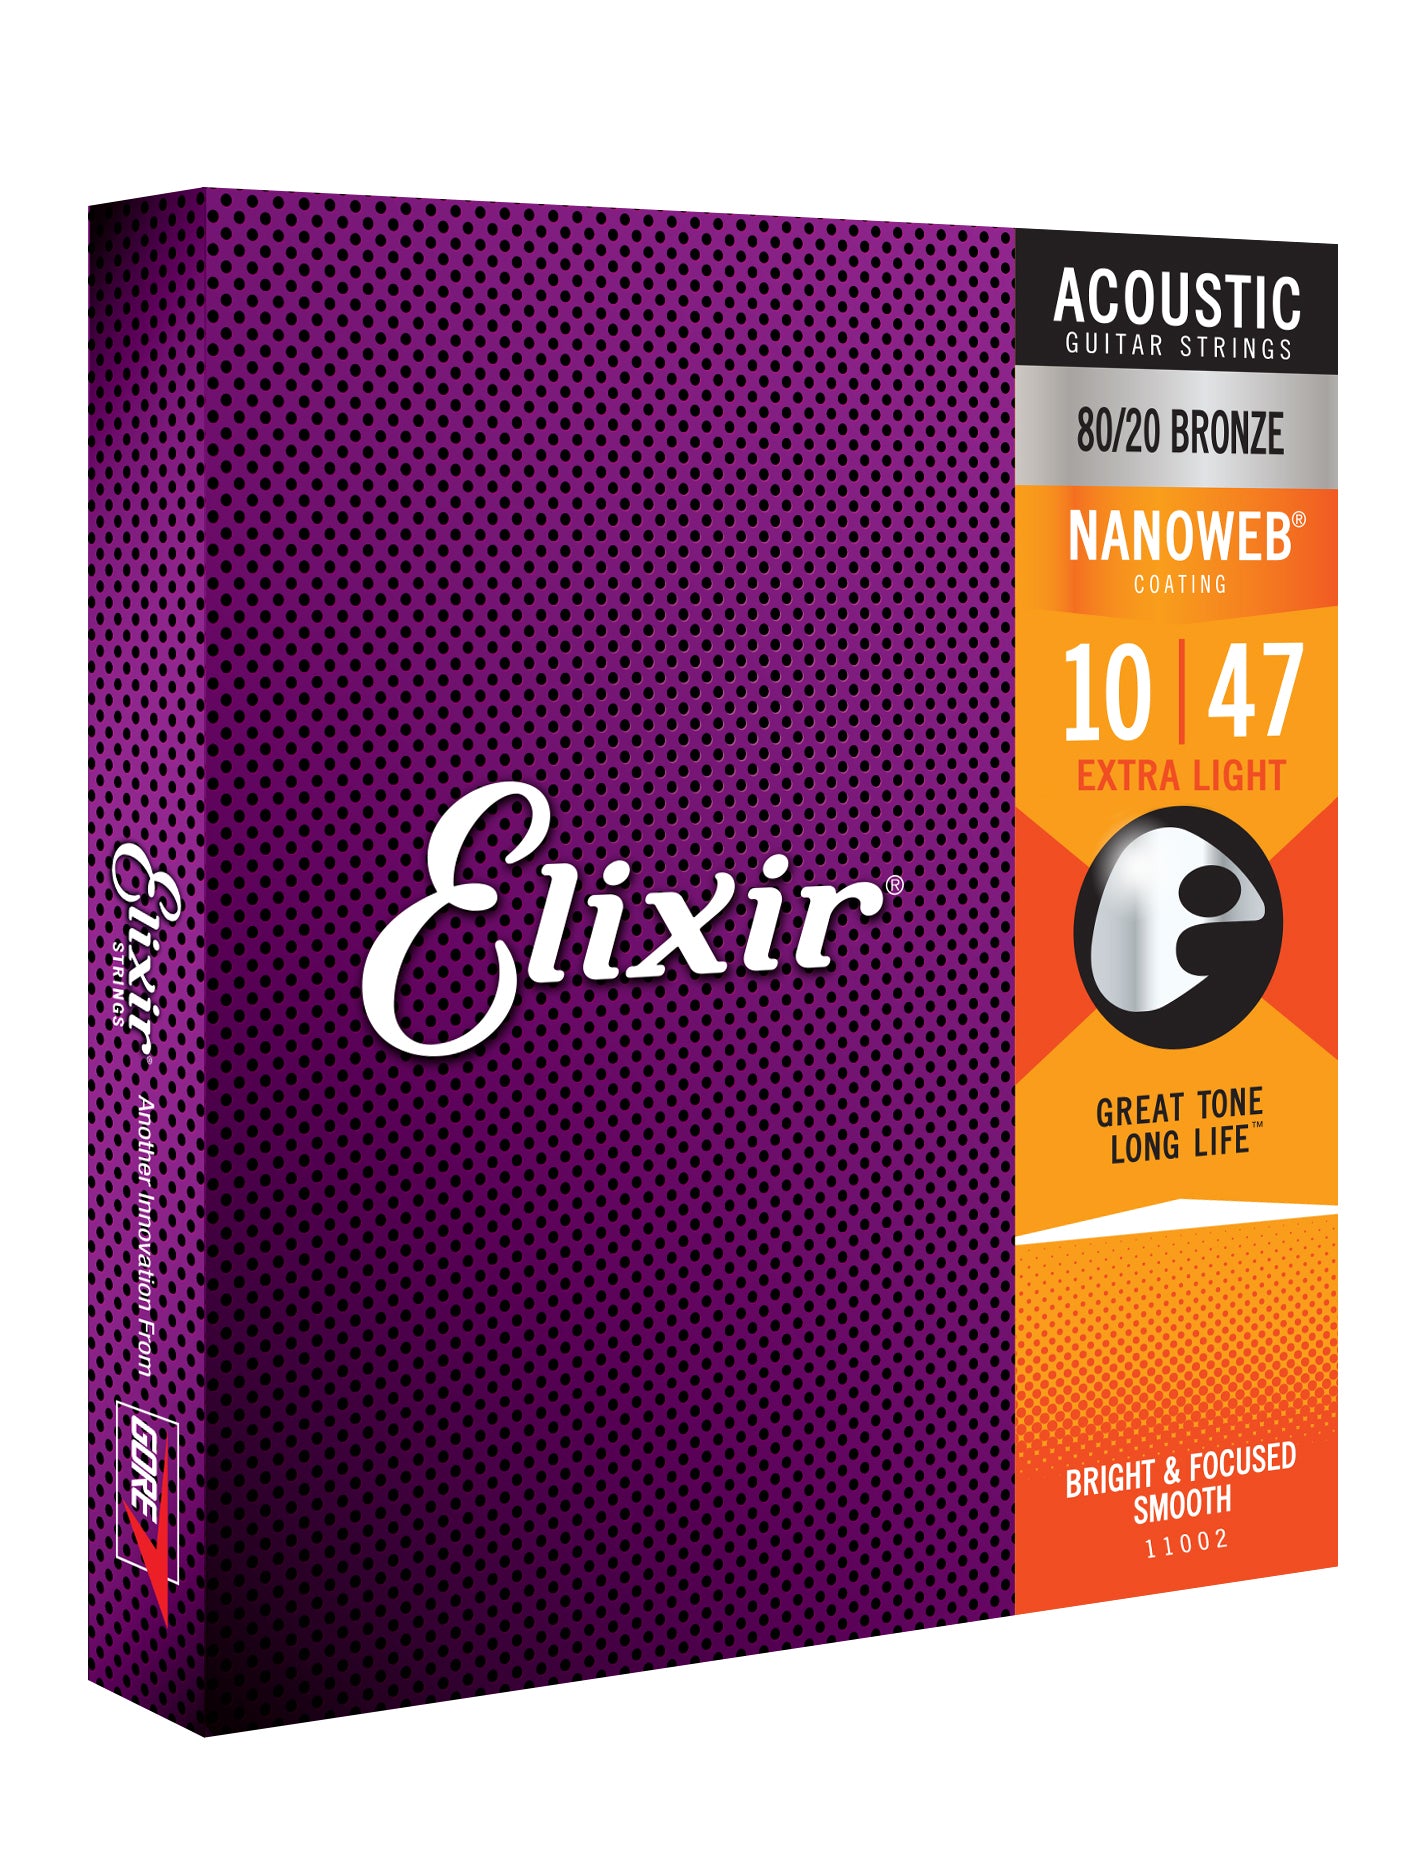 Elixir 11102 Nanoweb 80/20 Bronze Acoustic Strings